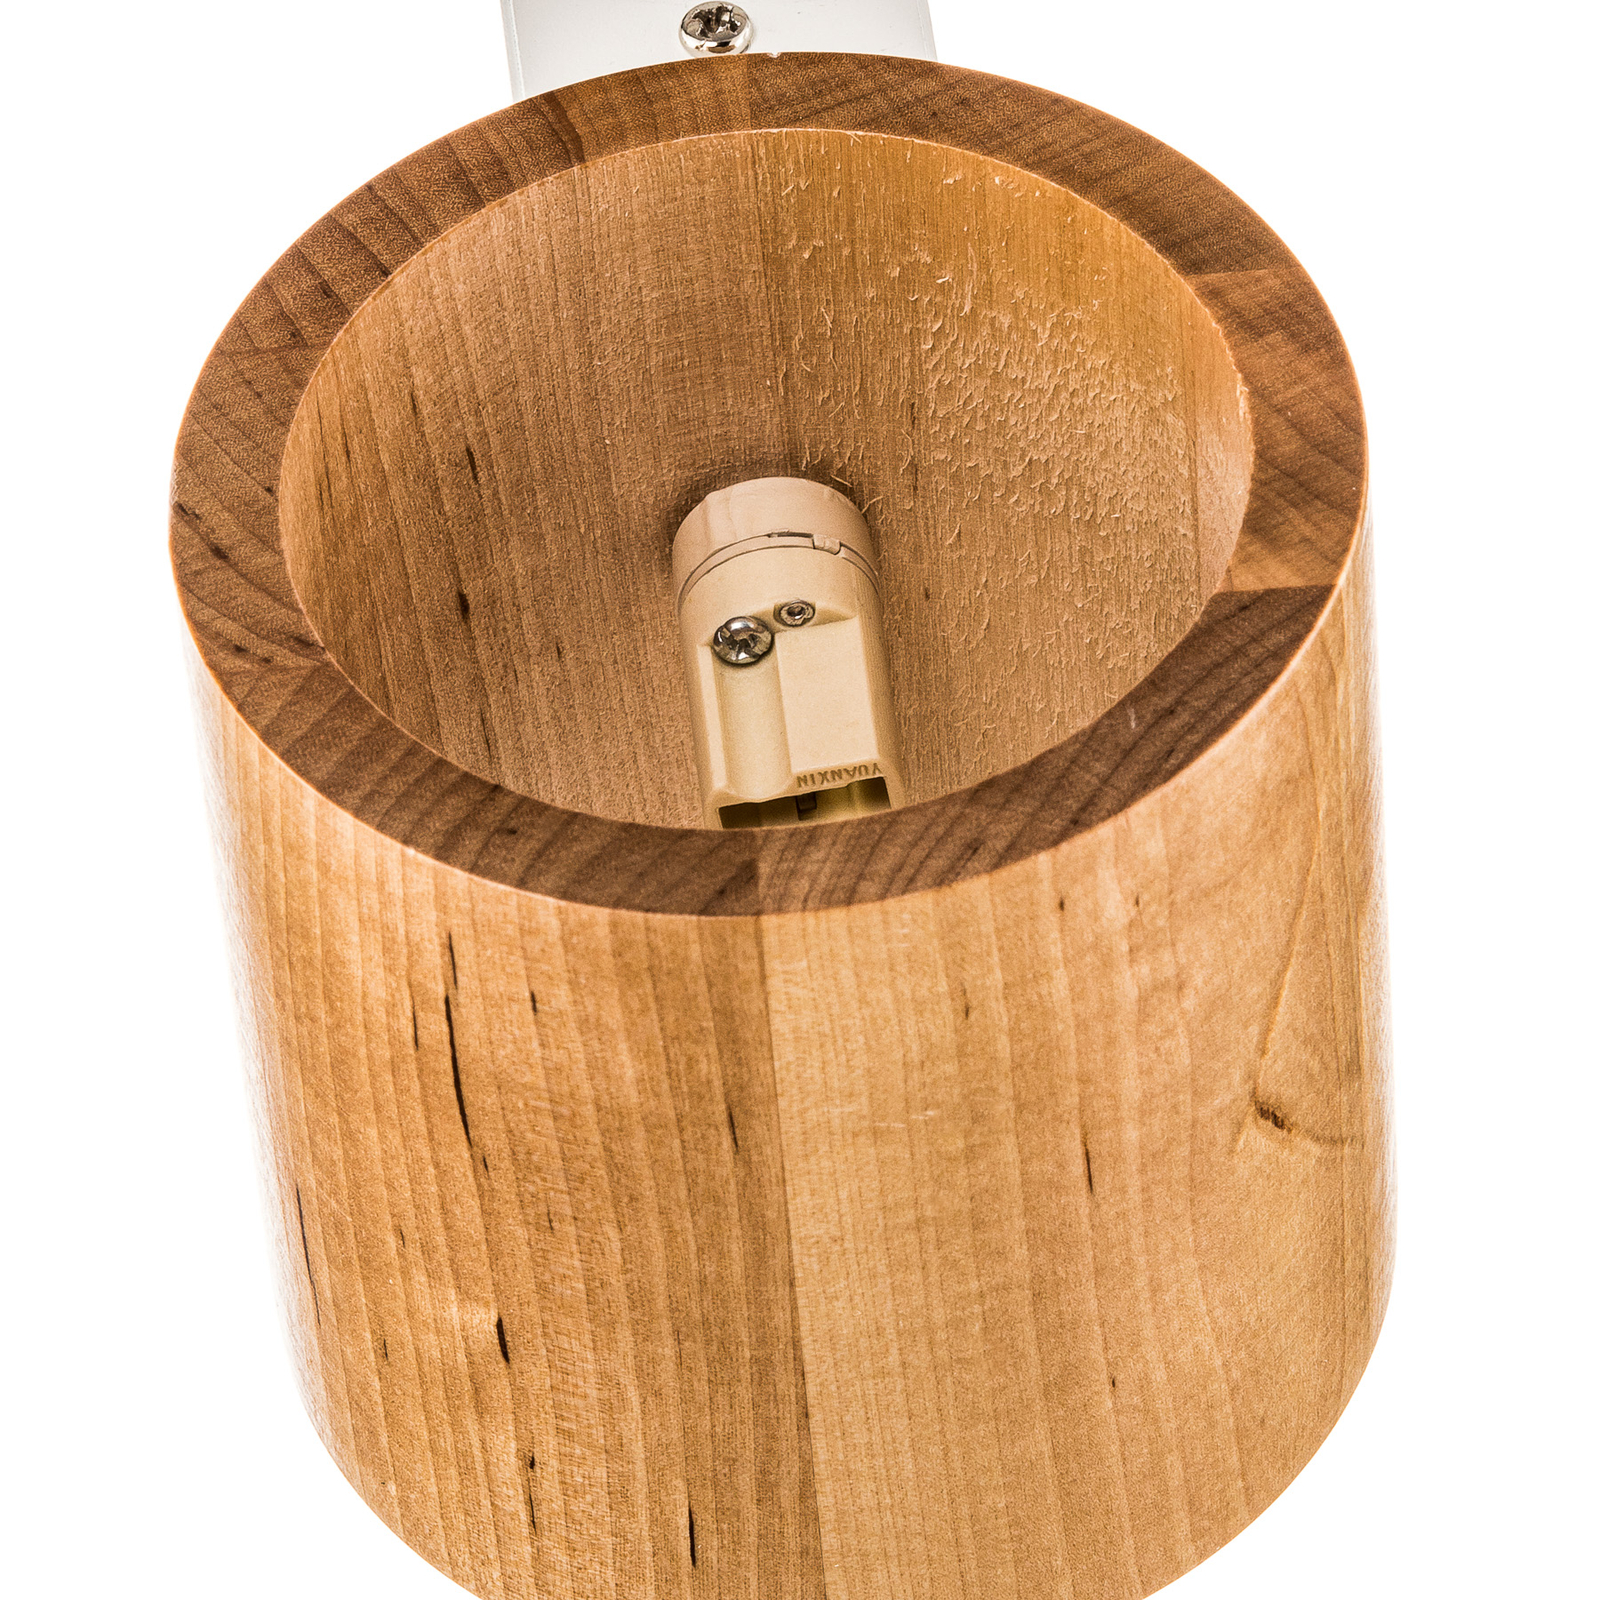 Ara wandlamp als houten cilinder